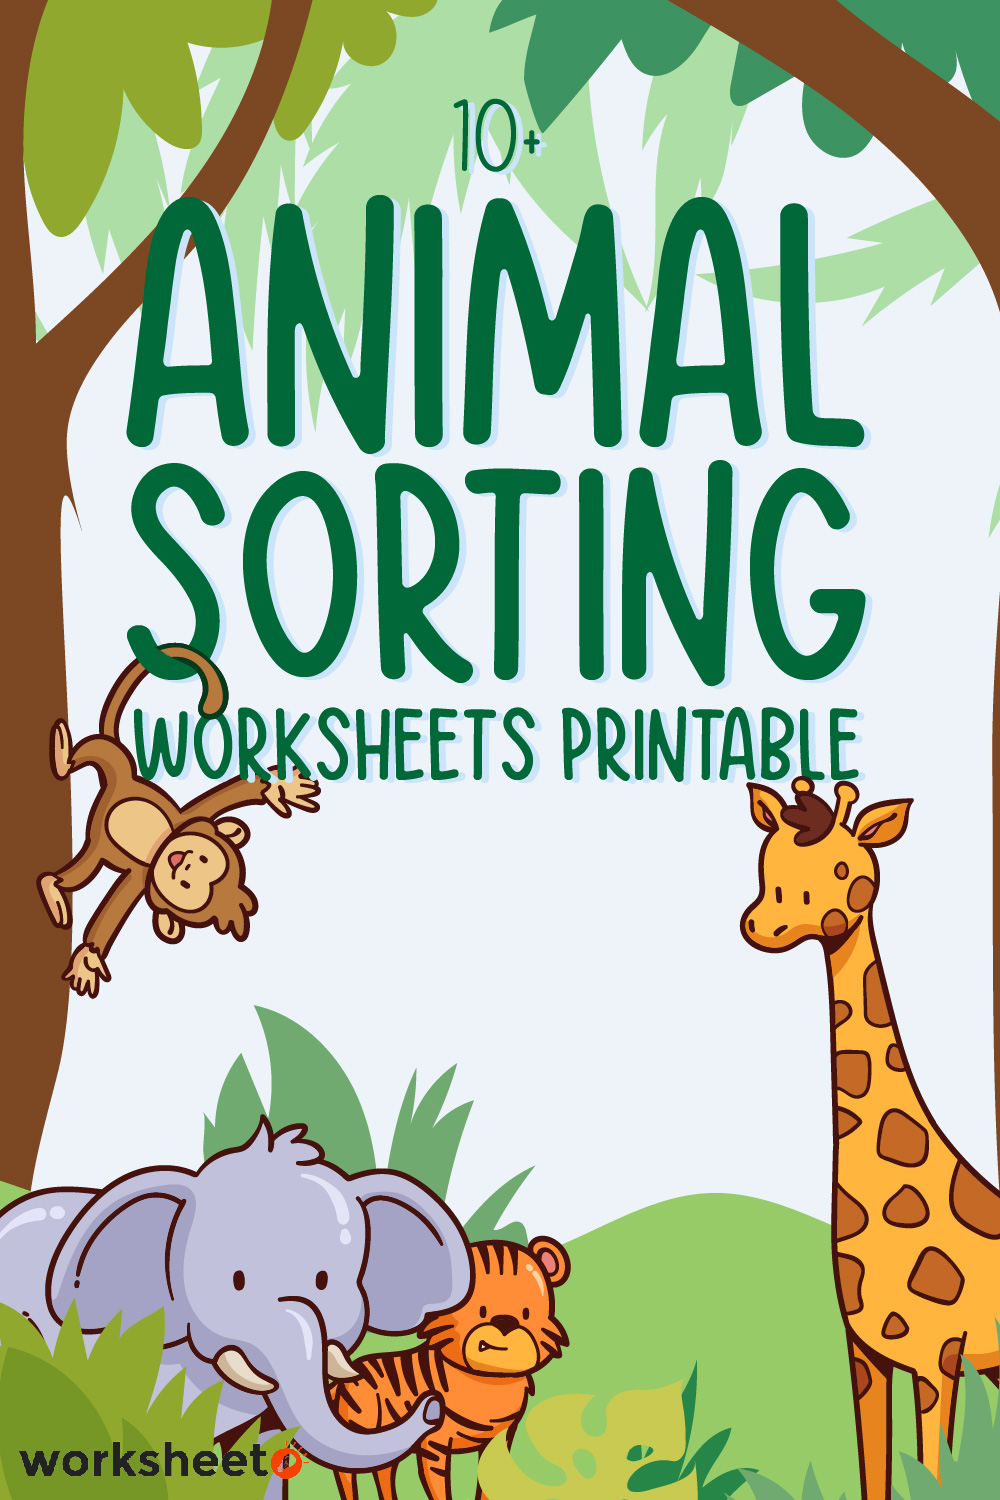 13 Images of Animal Sorting Worksheets Printable